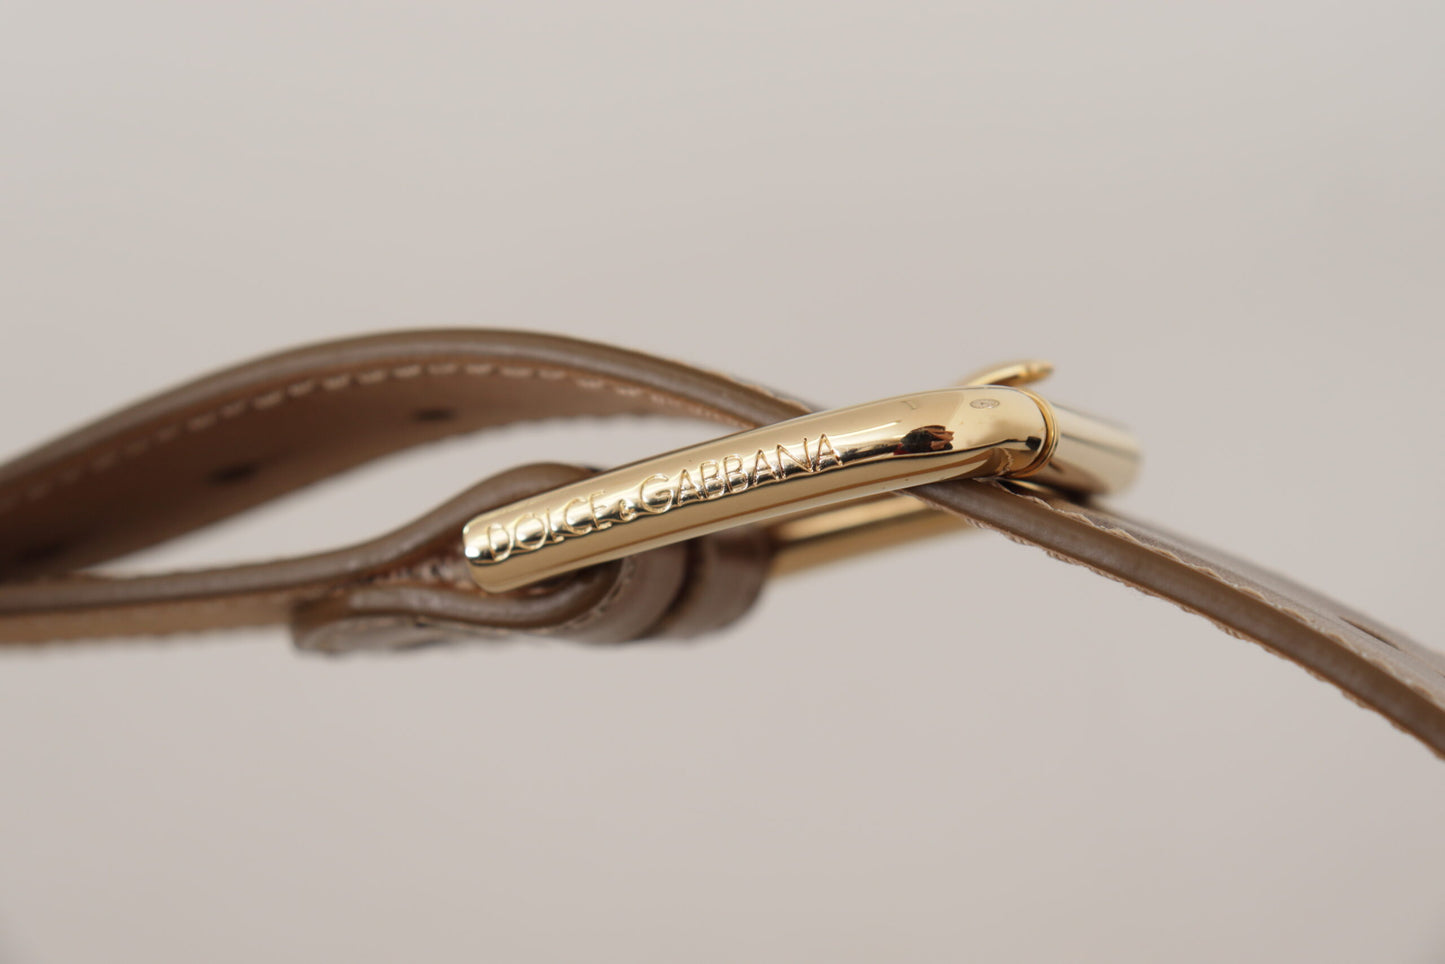 Elegant Bronze Leather Belt with Logo Buckle